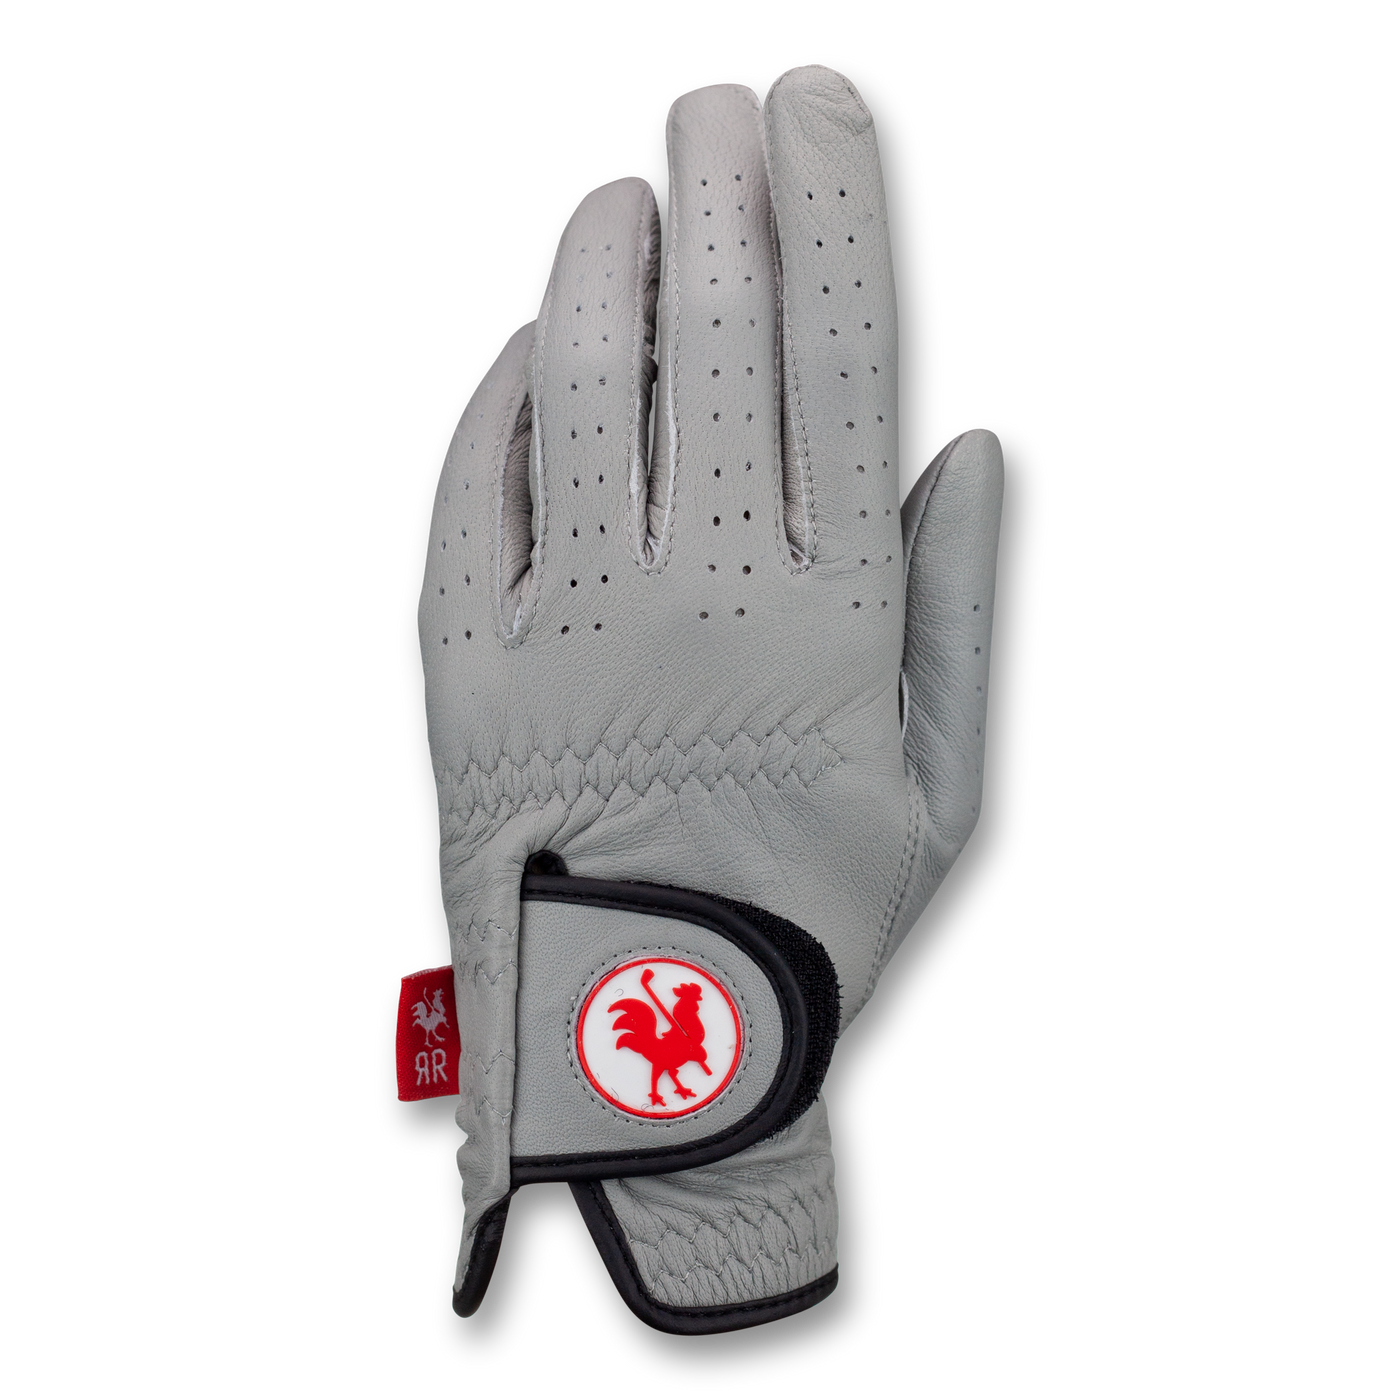 Women's Brahma golf glove- Limited Edition left hand